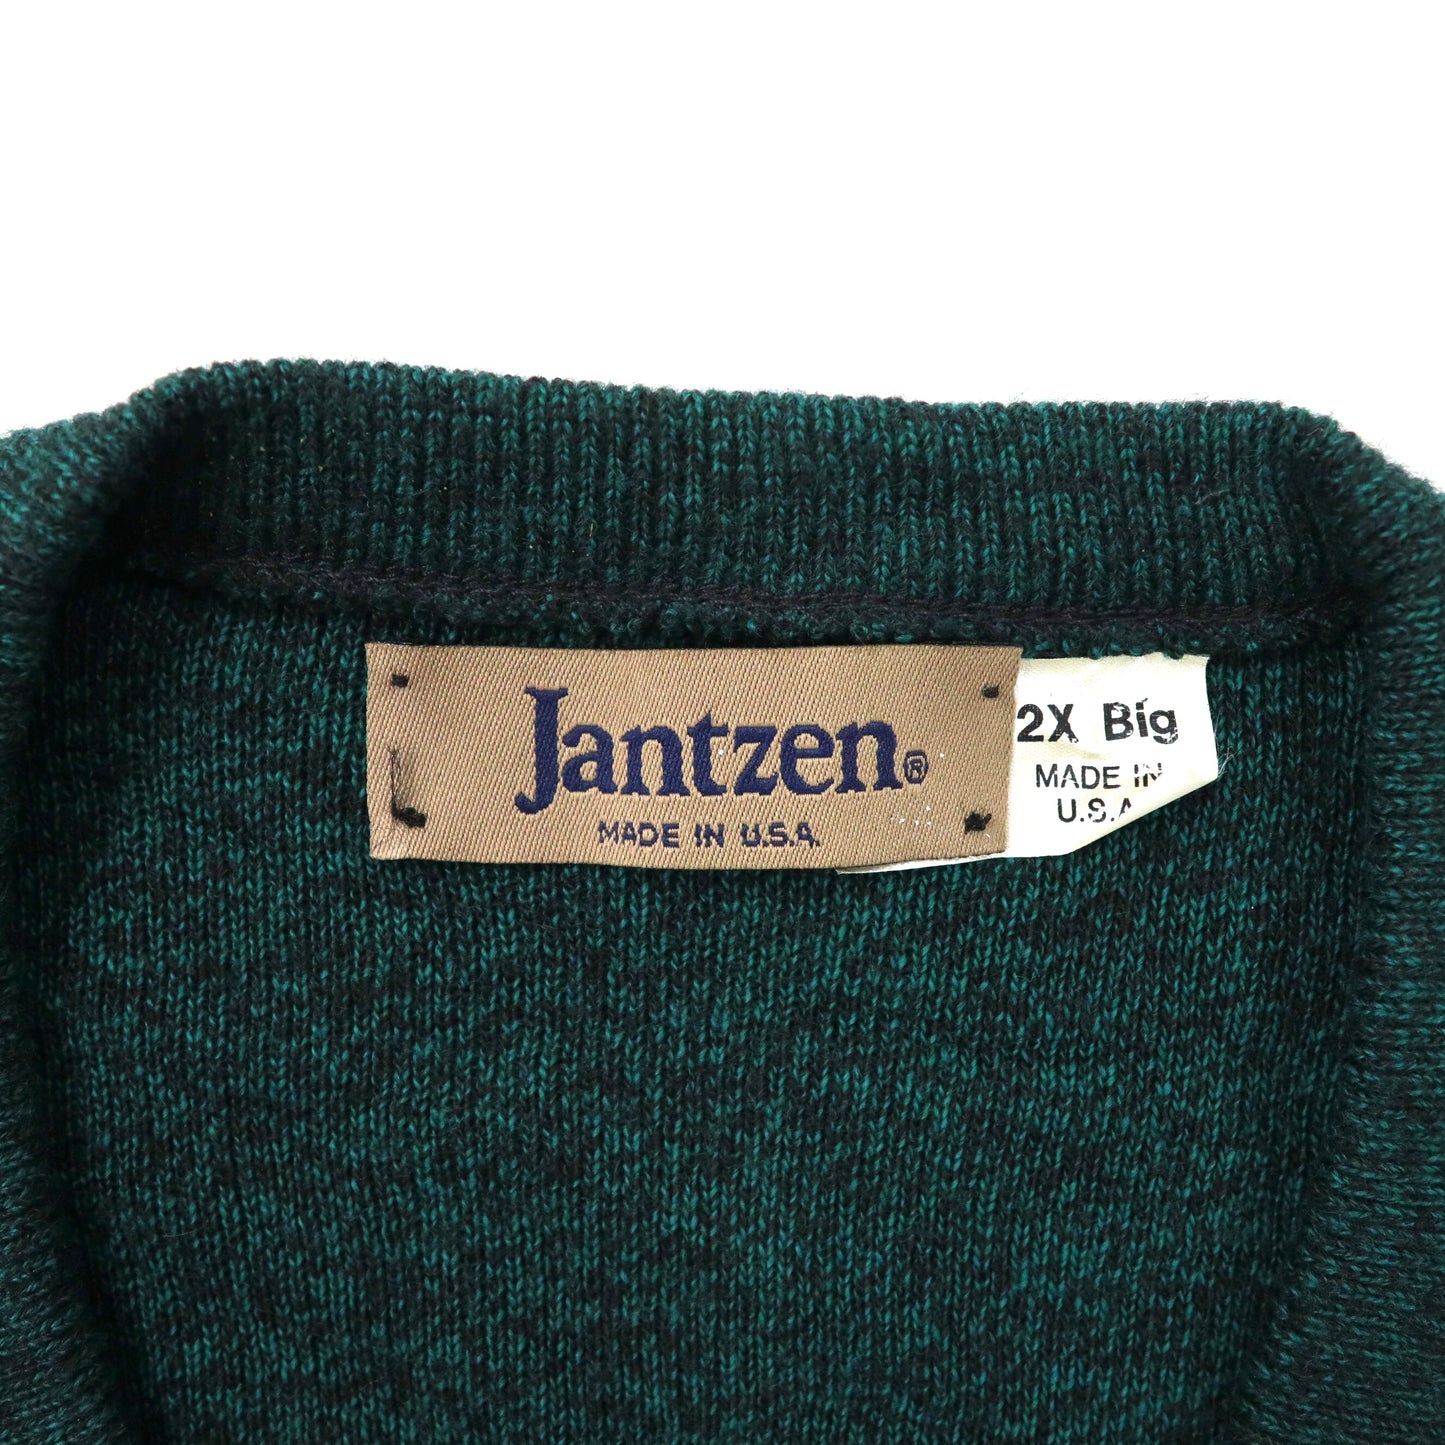 Jantzen ビッグサイズ Vネックニットベスト 2X グリーン アクリル USA製